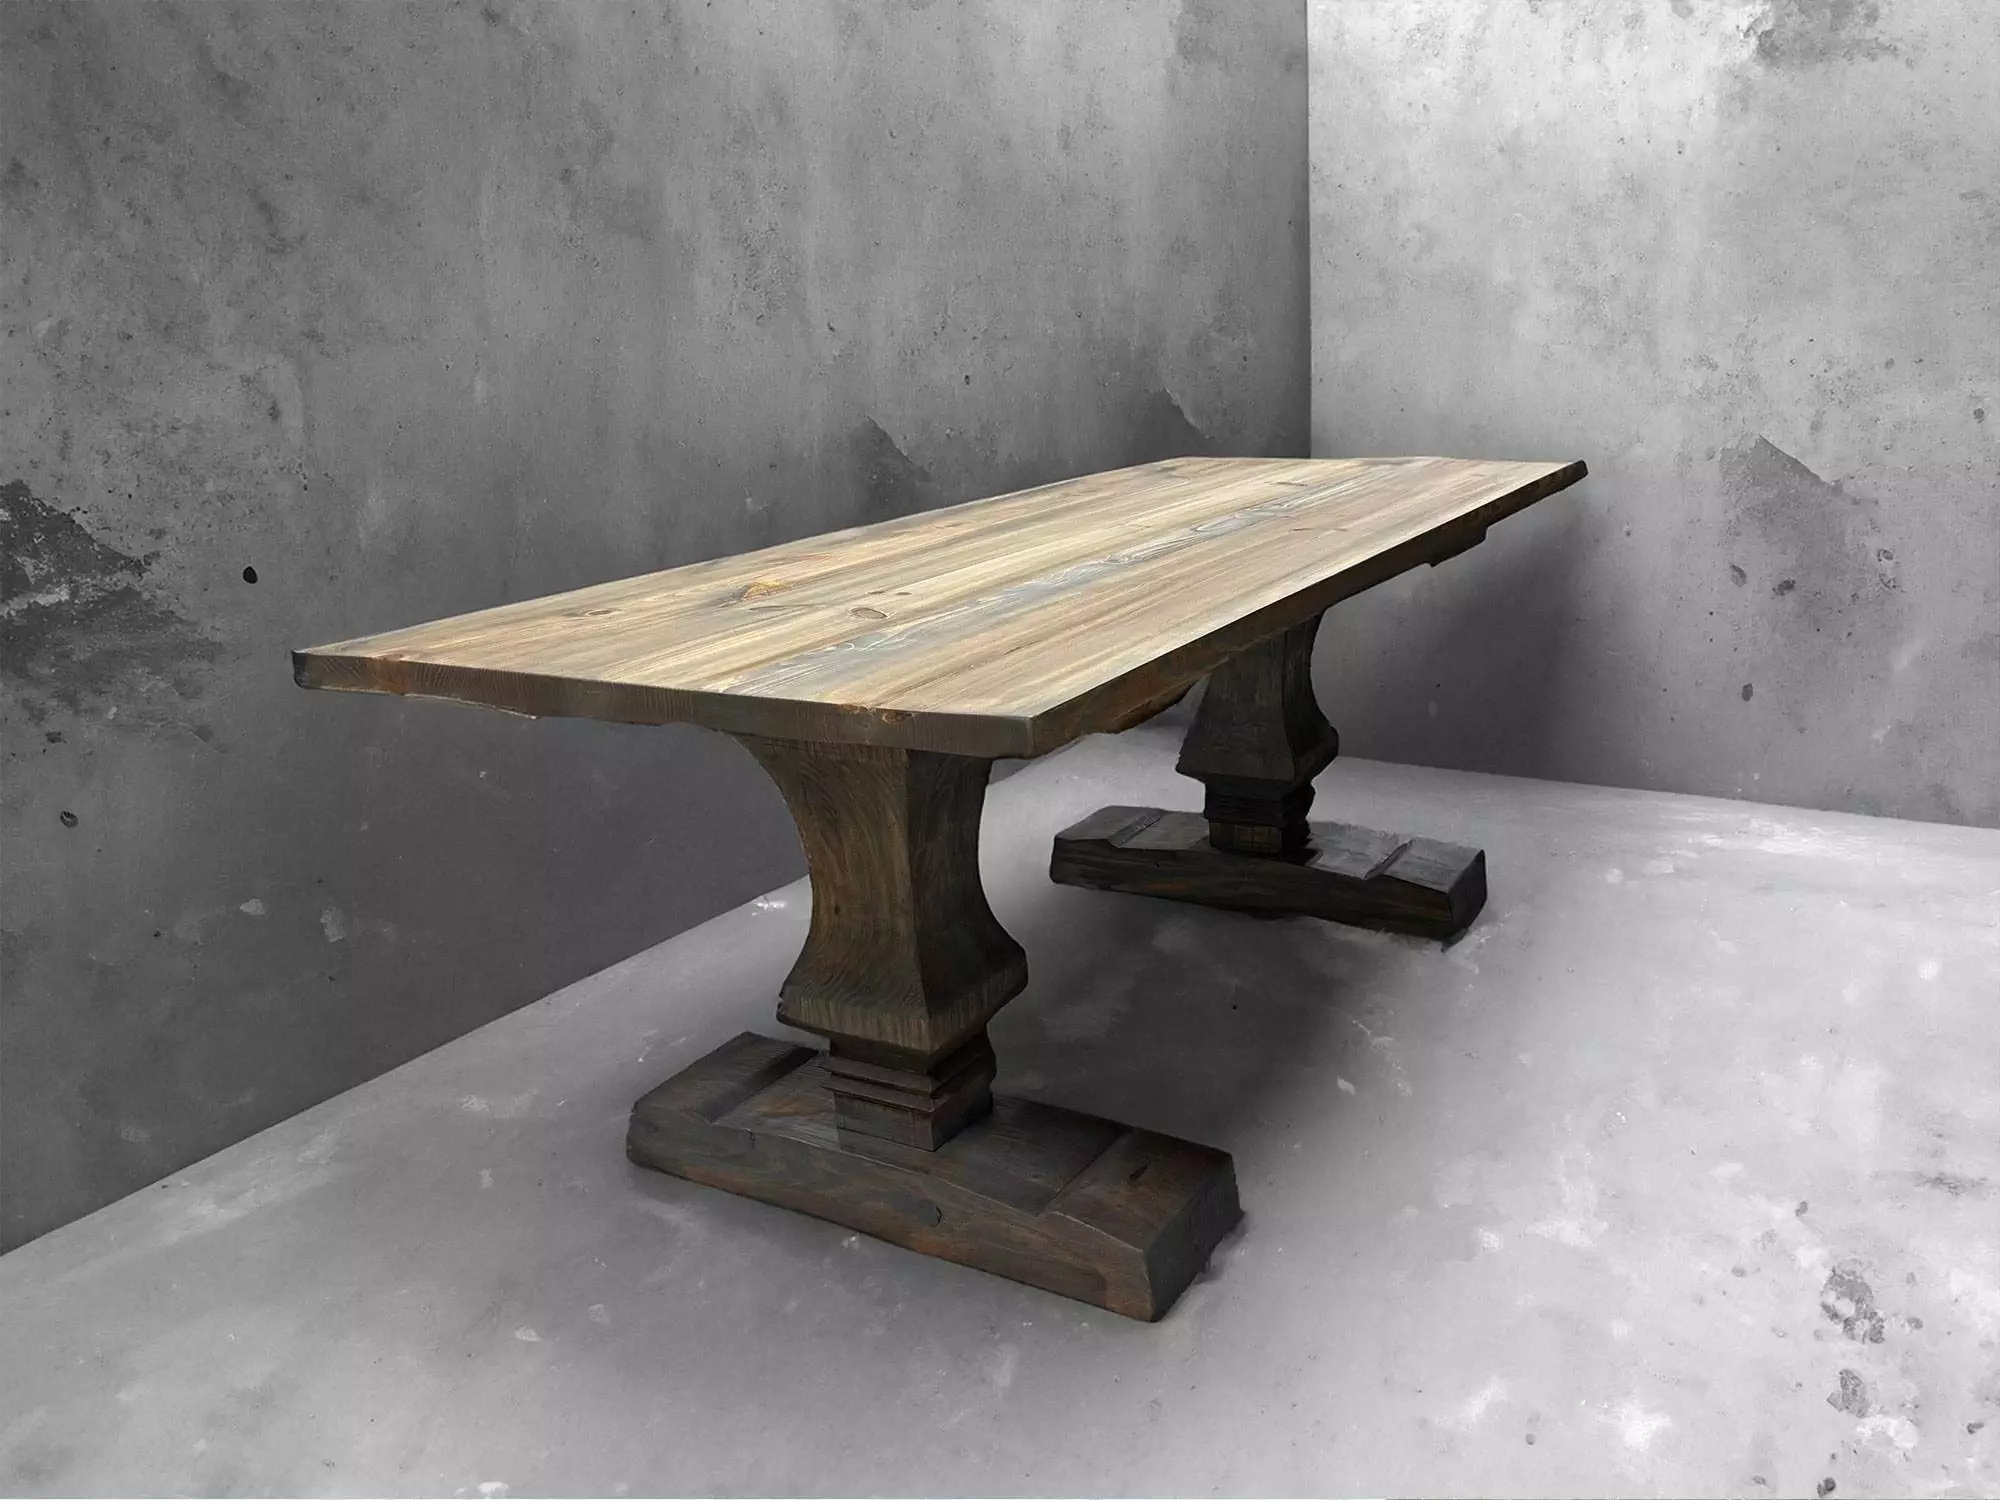 Solid wood pedestal leg table